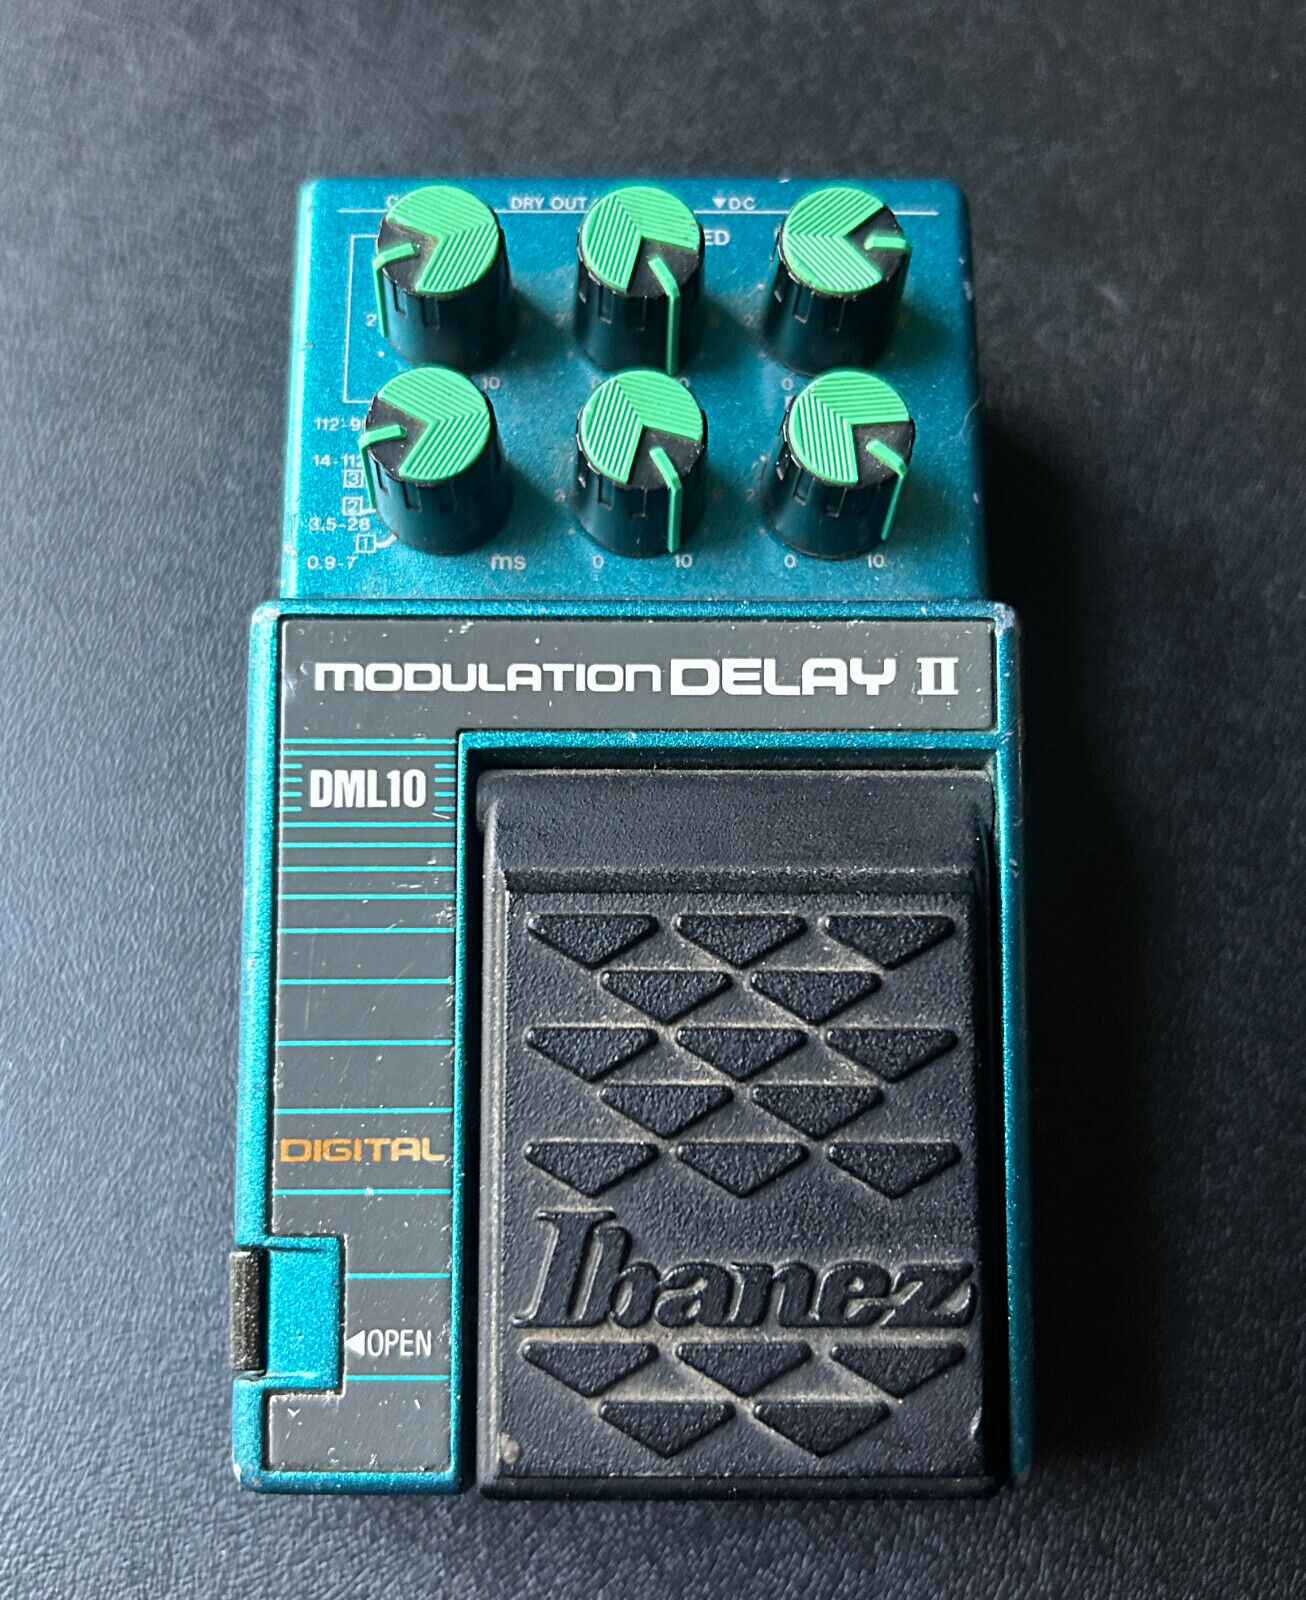 Ibanez DML10 Digital Modulation Delay II Guitar Effects Pedal - Made In Japan 